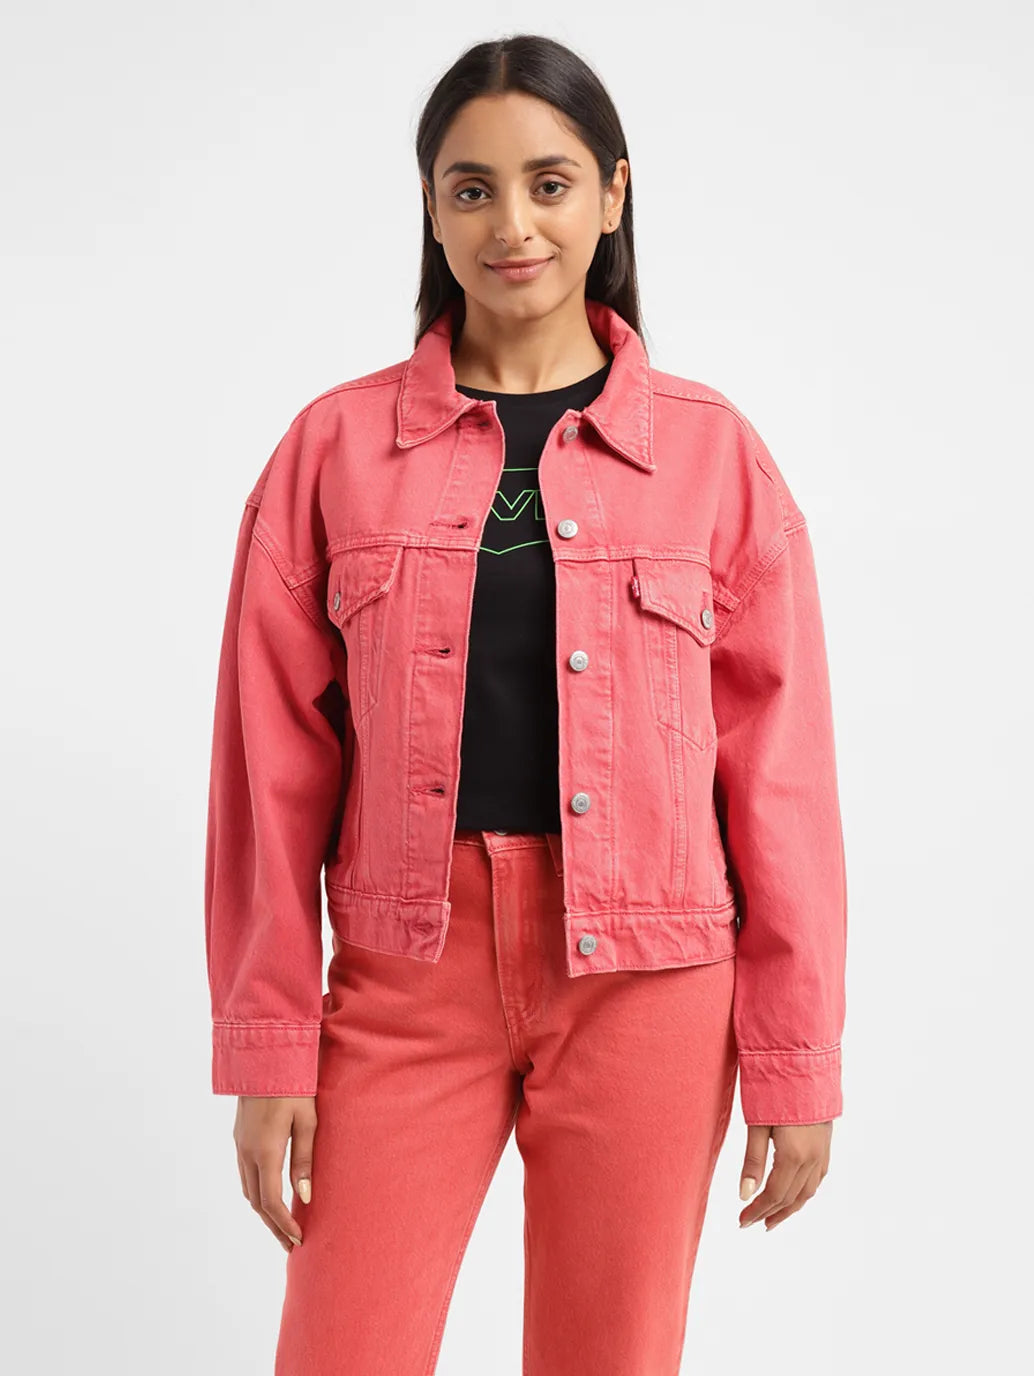 Women's Solid Coral Spread Collar Jacket